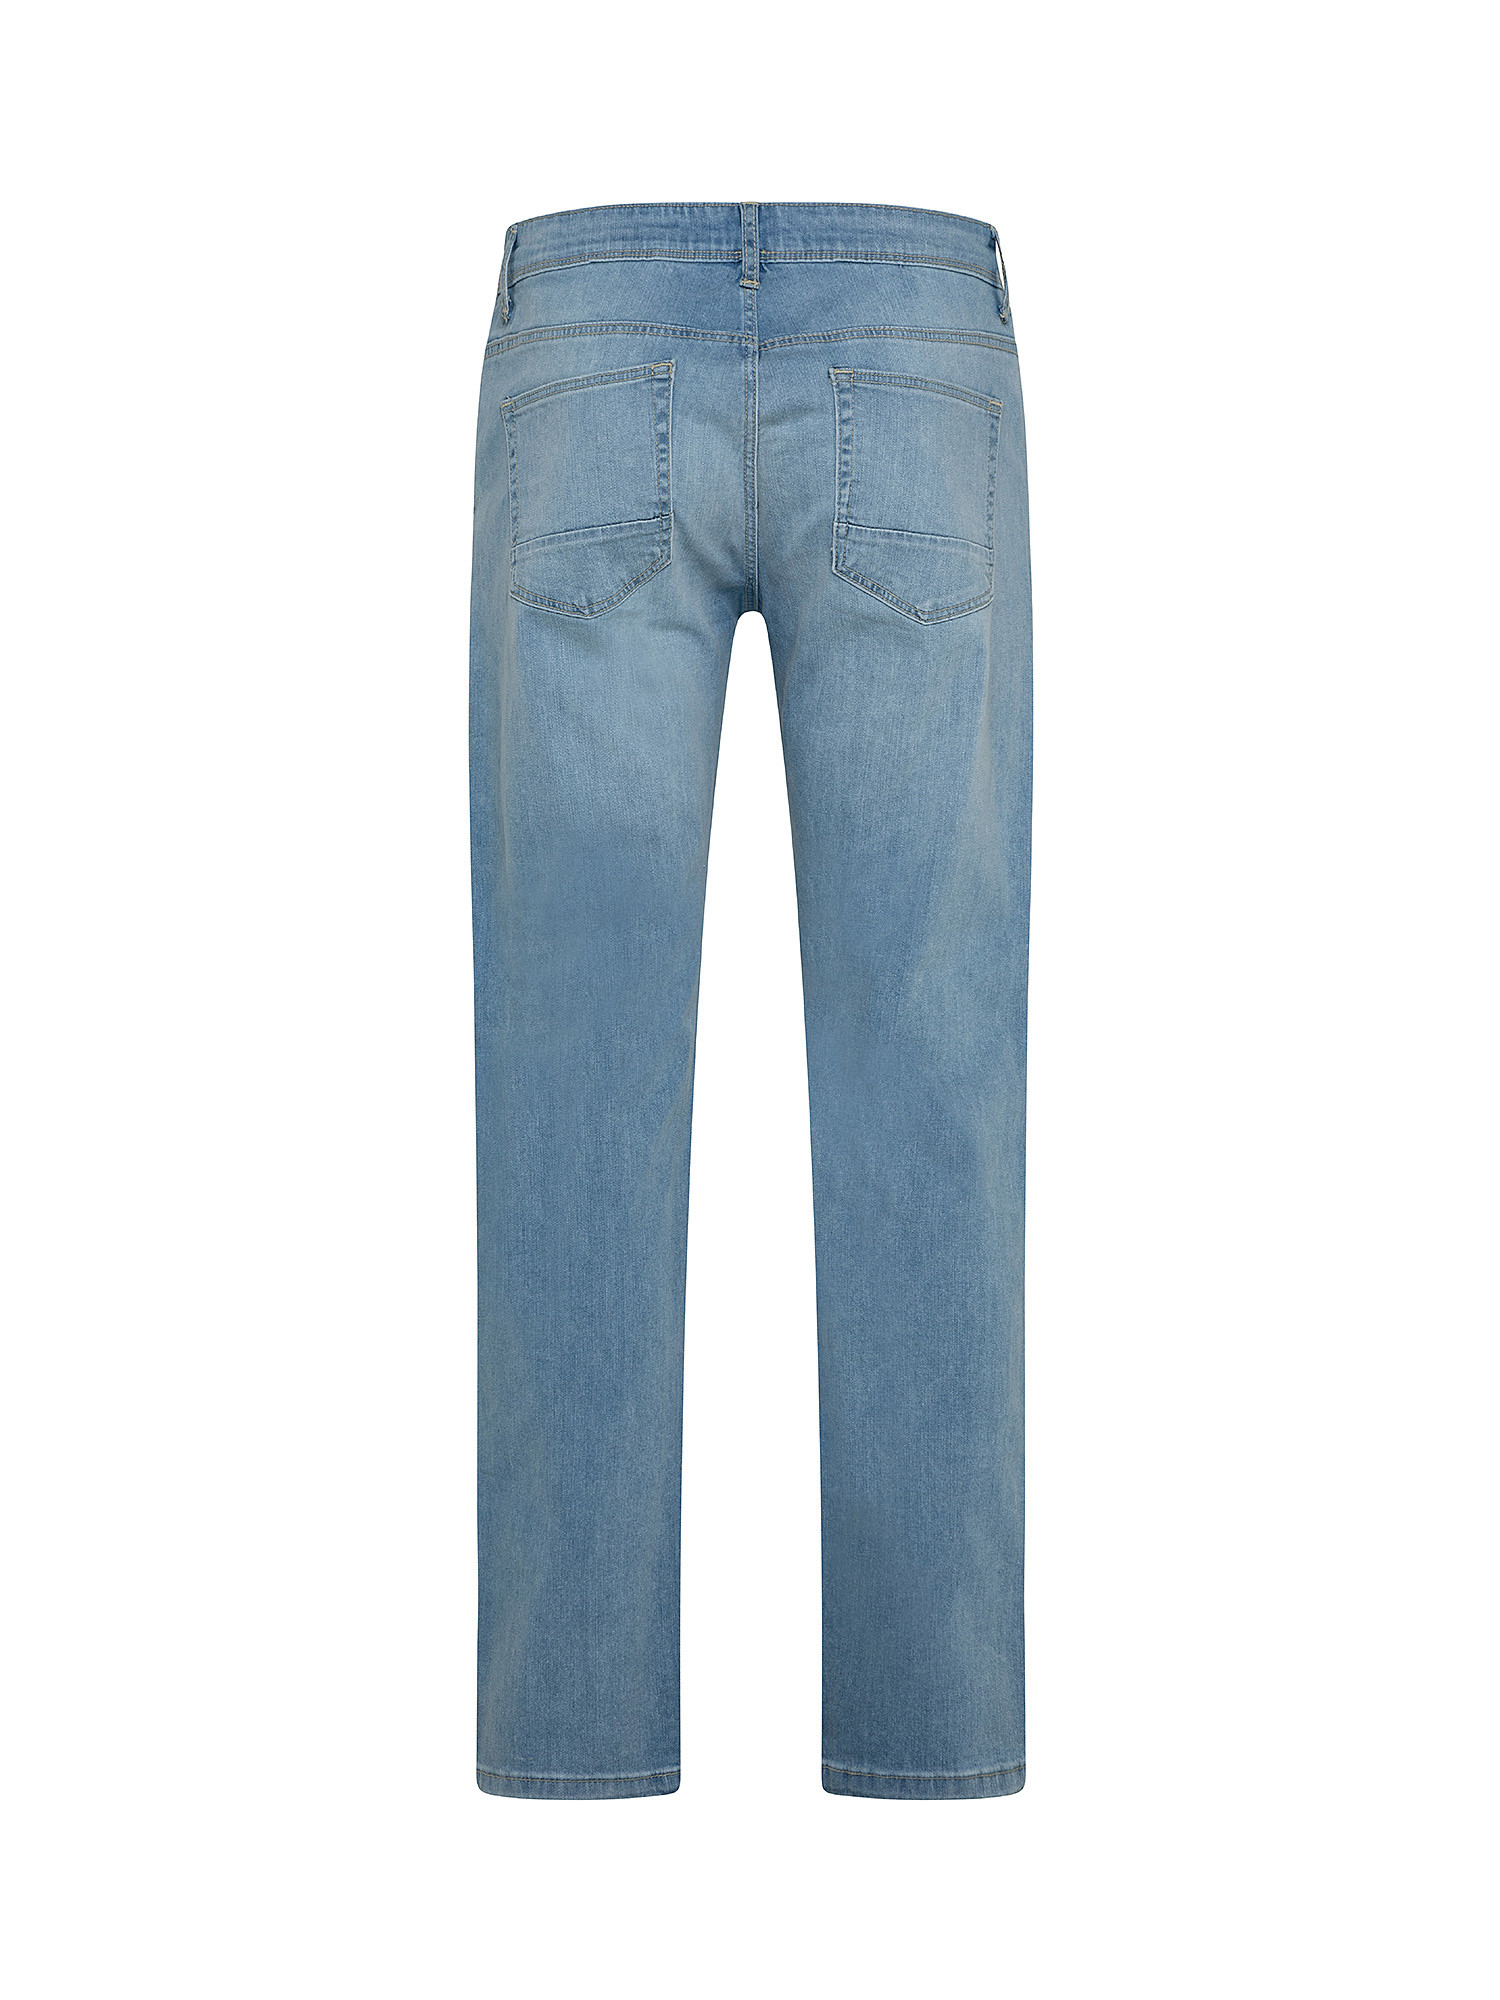 Jeans 5 tasche slim cotone leggero stretch, Blu chiaro, large image number 1